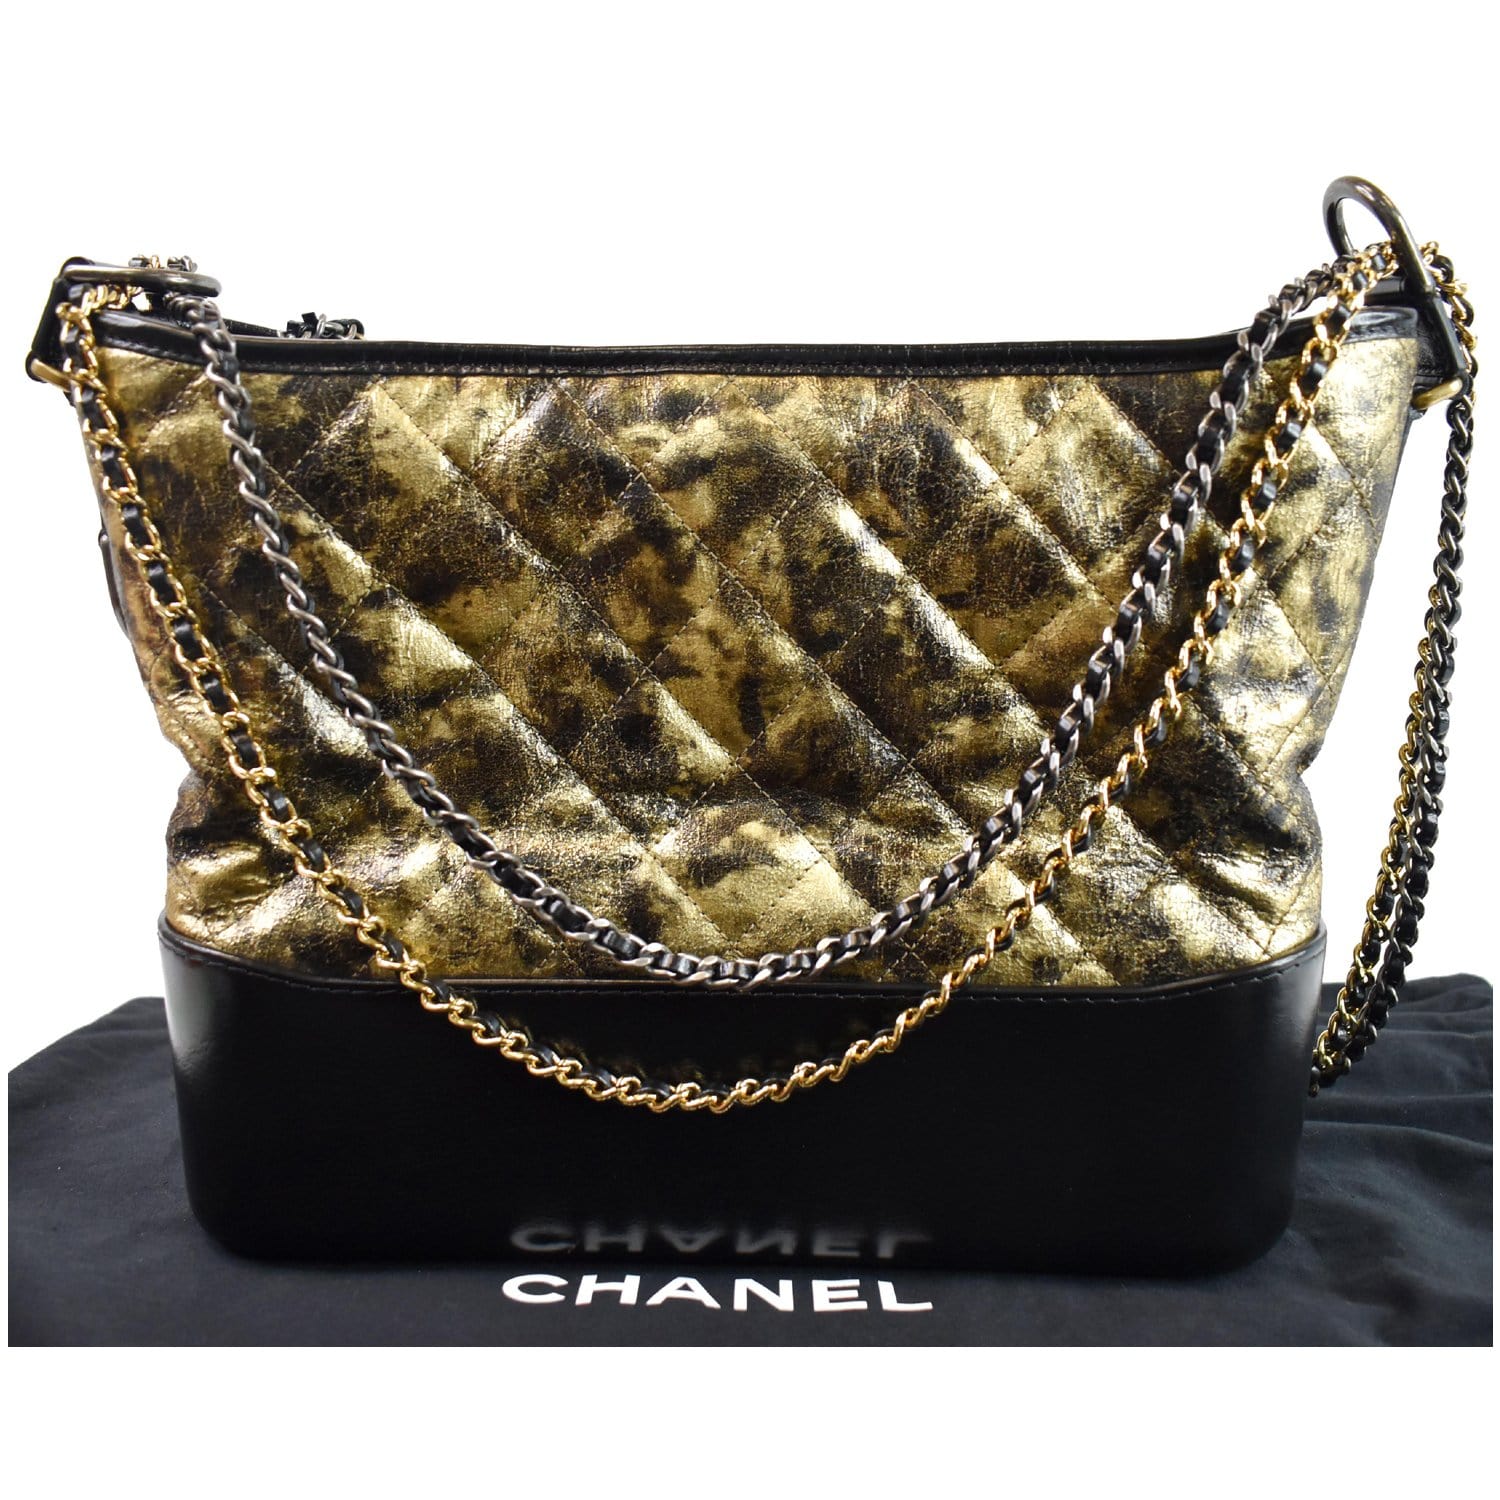 errvina_shop - *Tas Chanel Gabrielle Hobo Bag Include Box Chanel K2006 Semi  Premium* Harga Reseller/Dropship: Warna: Black, Gold, Maroon. Bahan: Faux  Calf Leather Graphite Crocodile Skin Embossed (luar), Kain Maroon Tebal  (dalam).